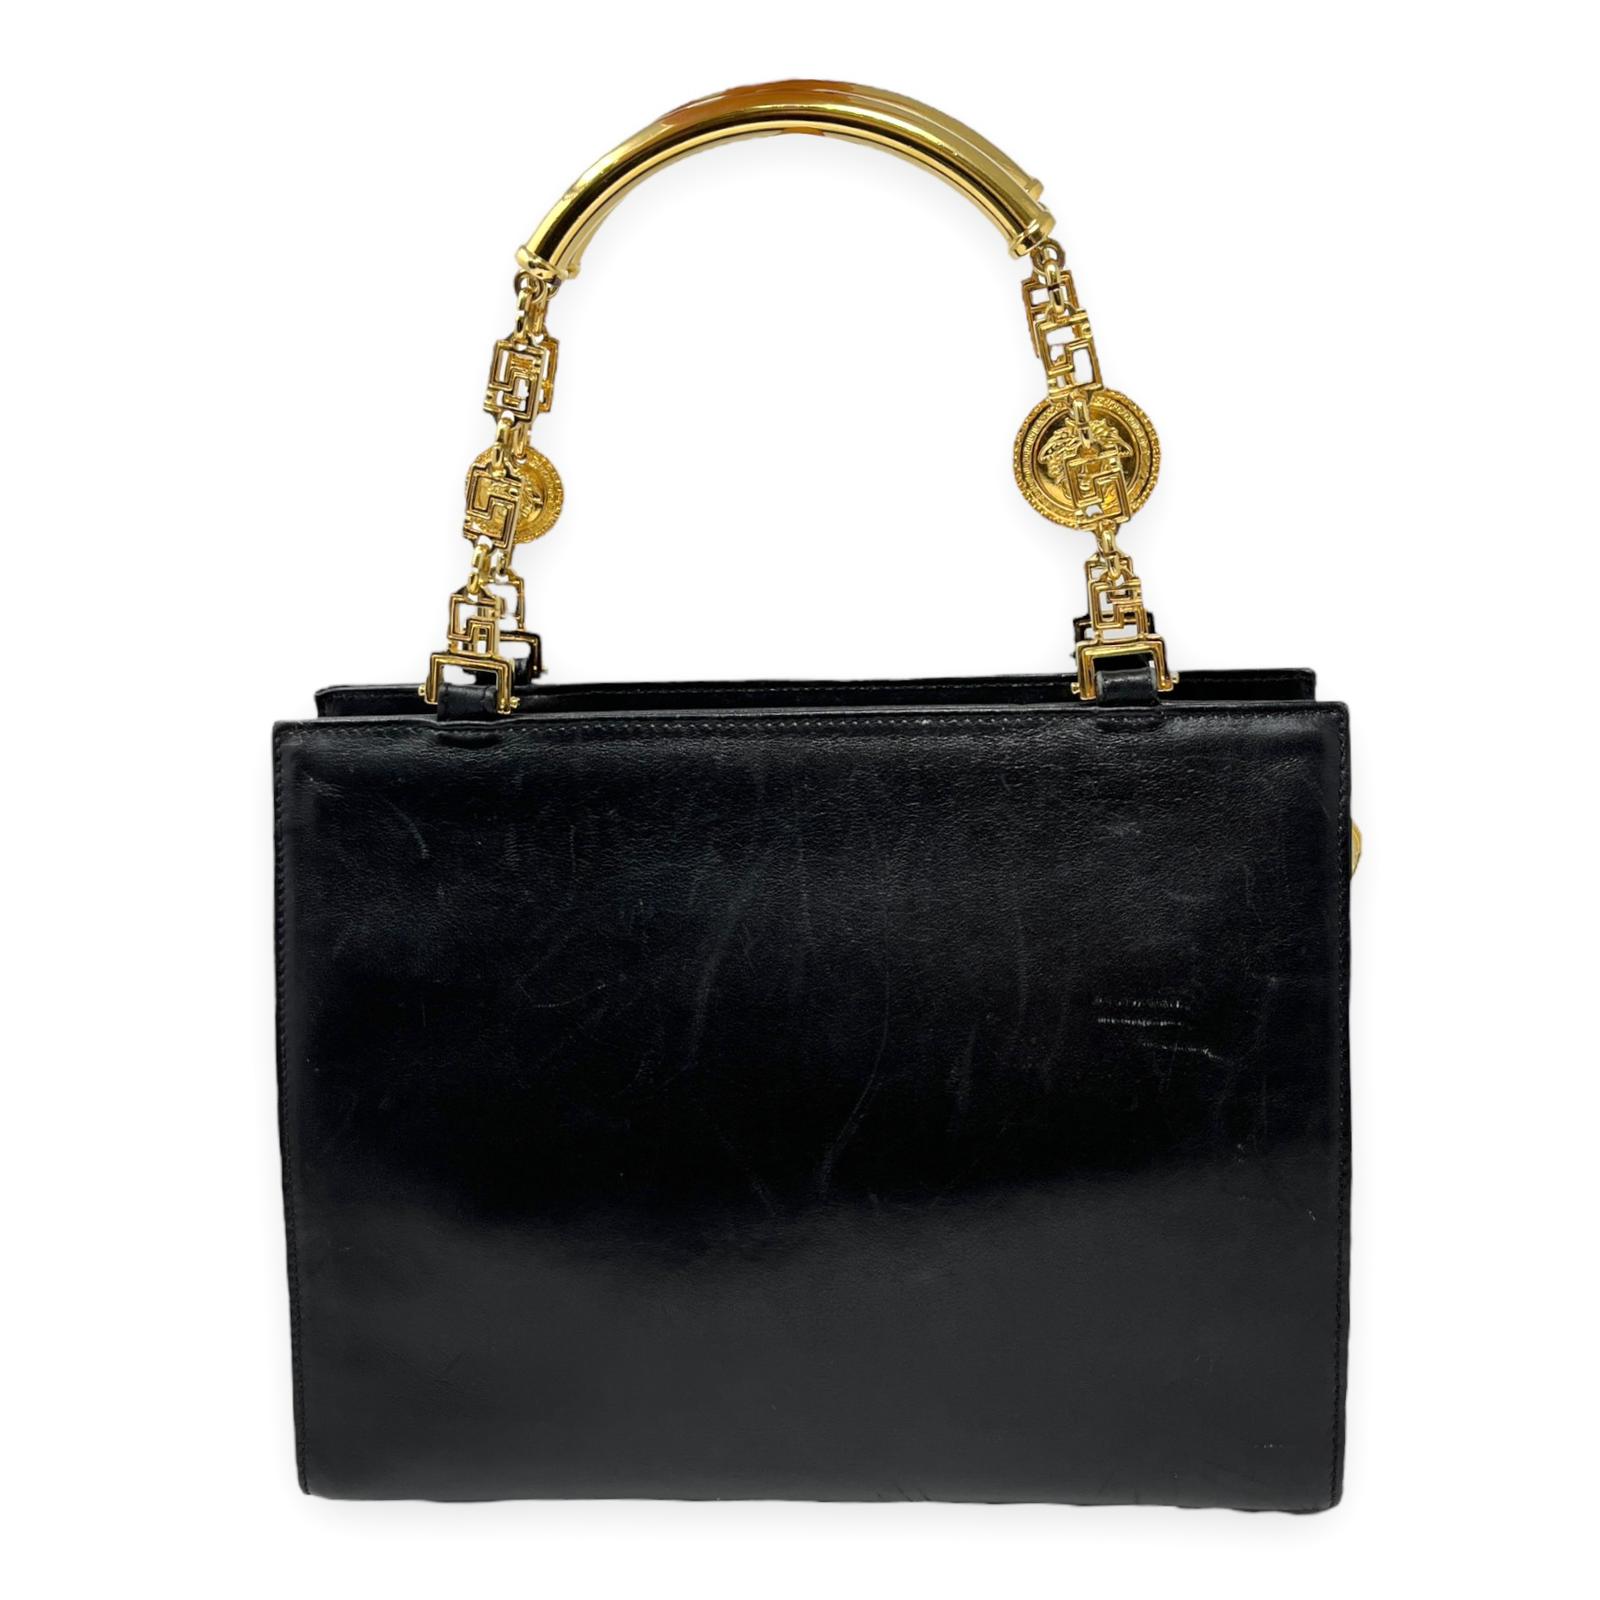 Versace Black Medusa Charm Top Handle Bag